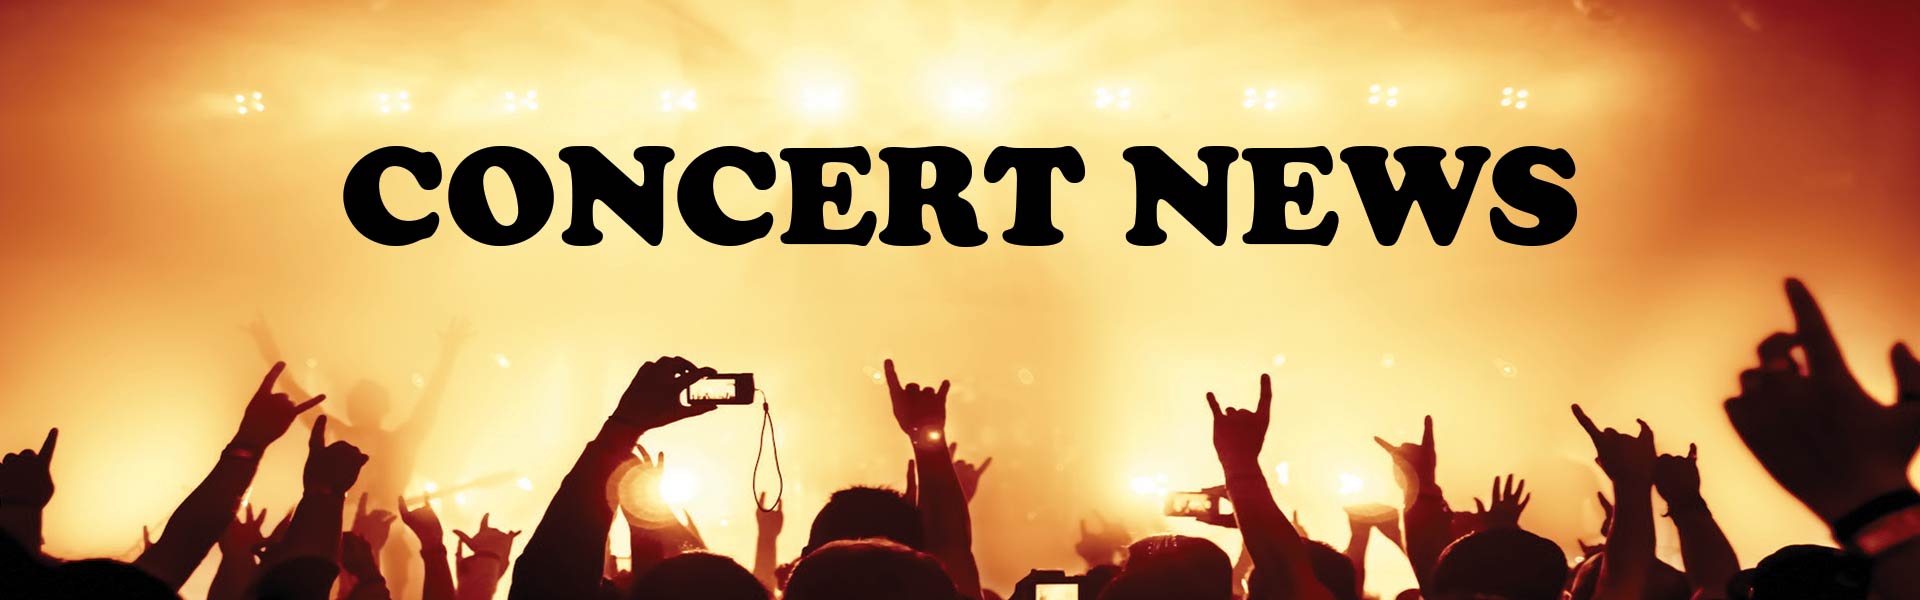 Concert News Heading